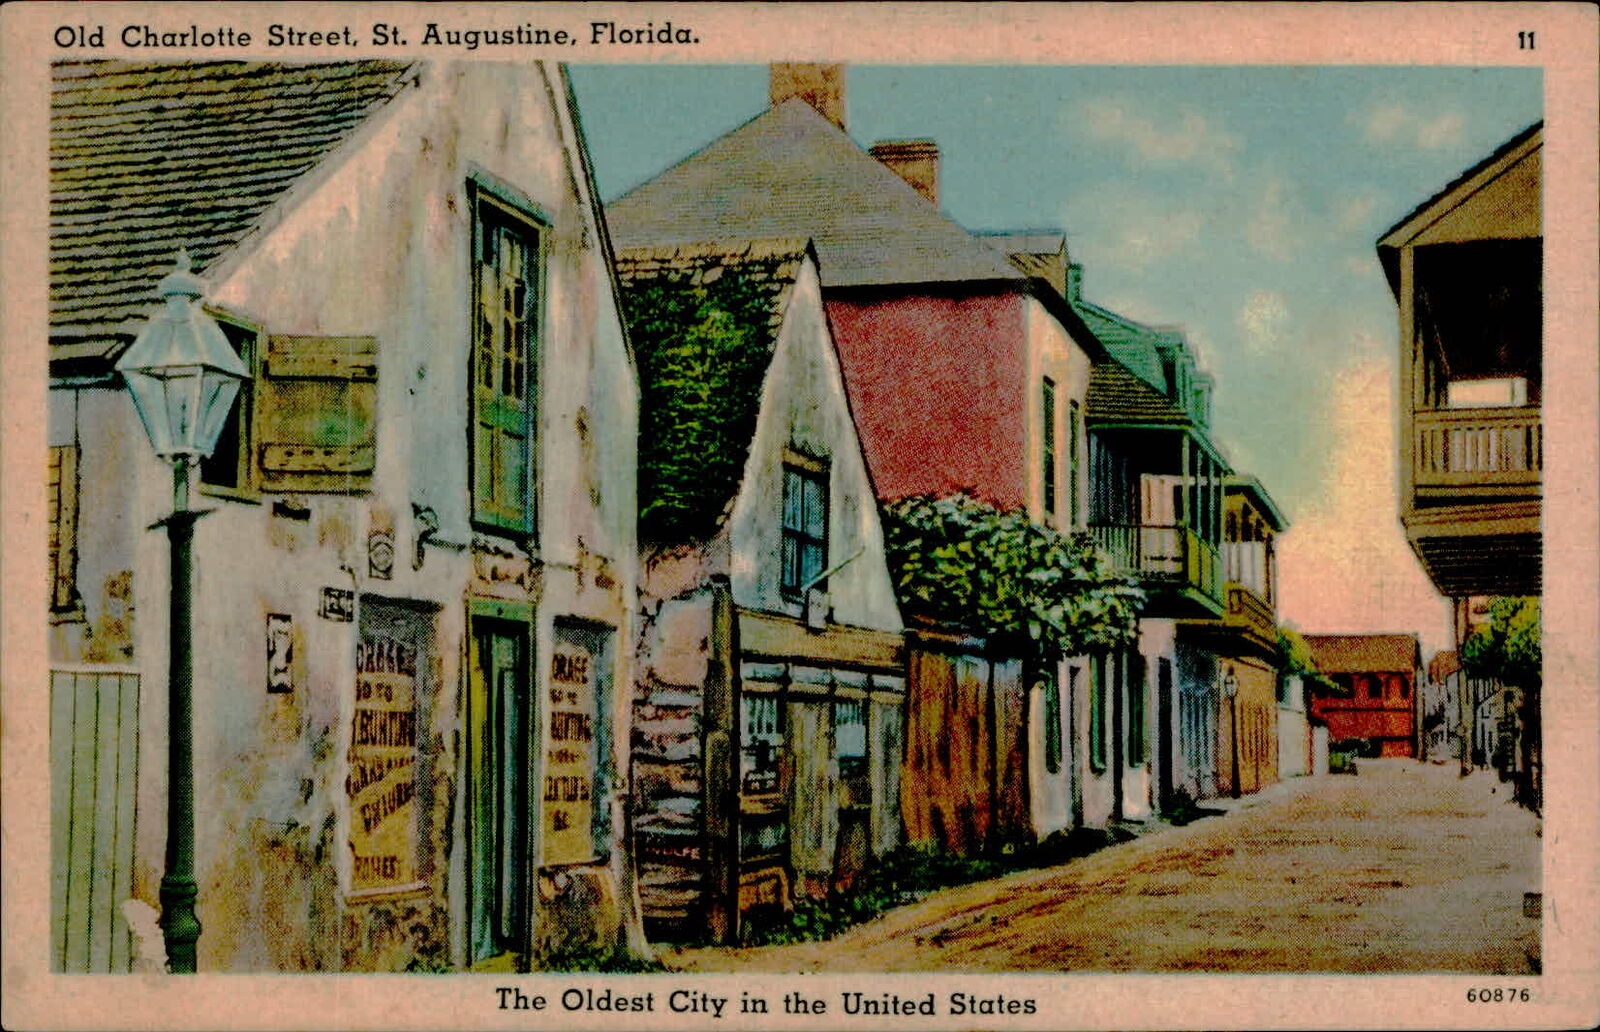 Postcard: Old Charlotte Street, St. Augustine, Florida. OL BATE PRIURE